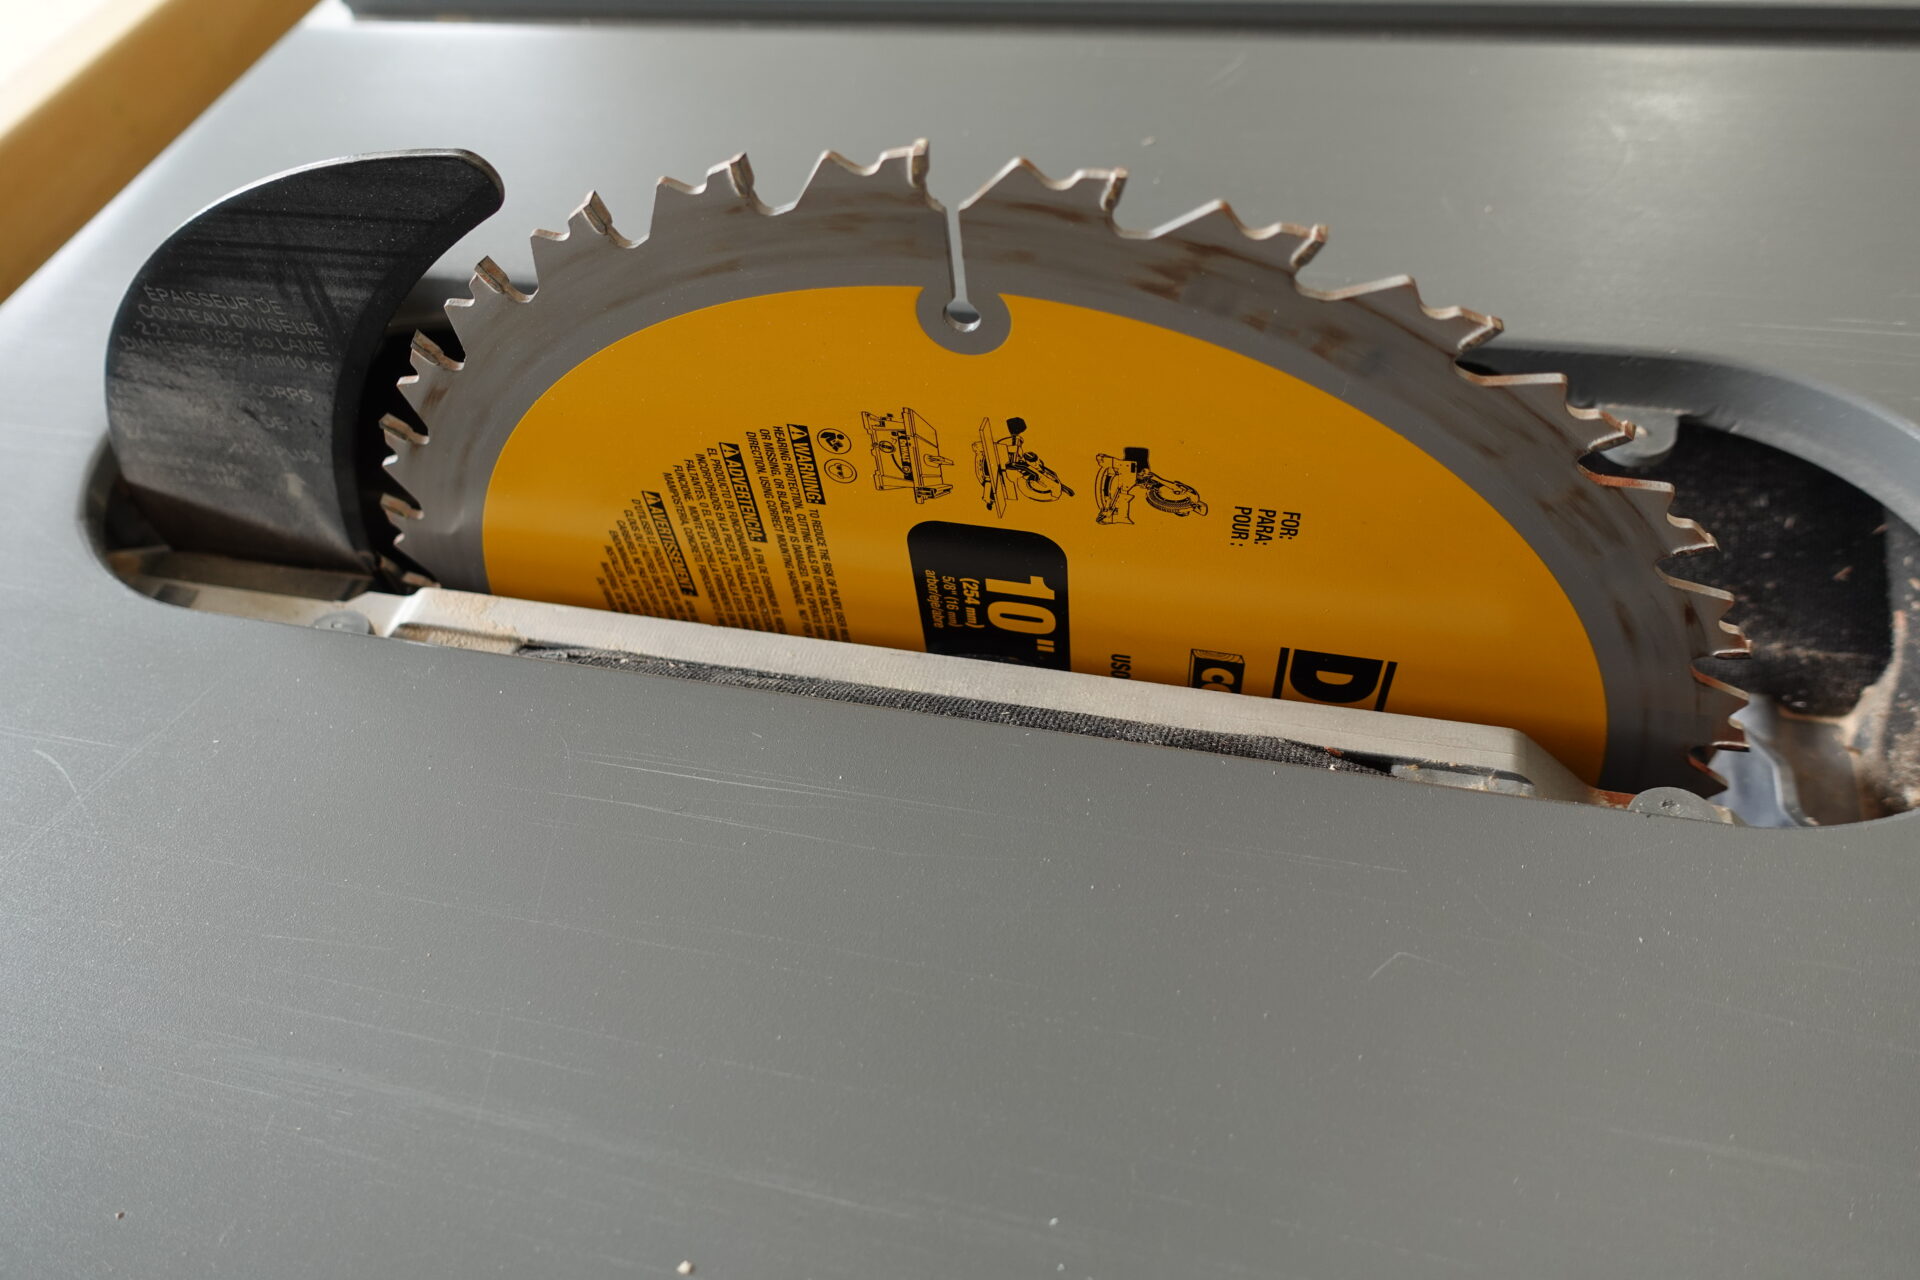 Dewalt DWE7491 10 inch saw blade installed with riving knife